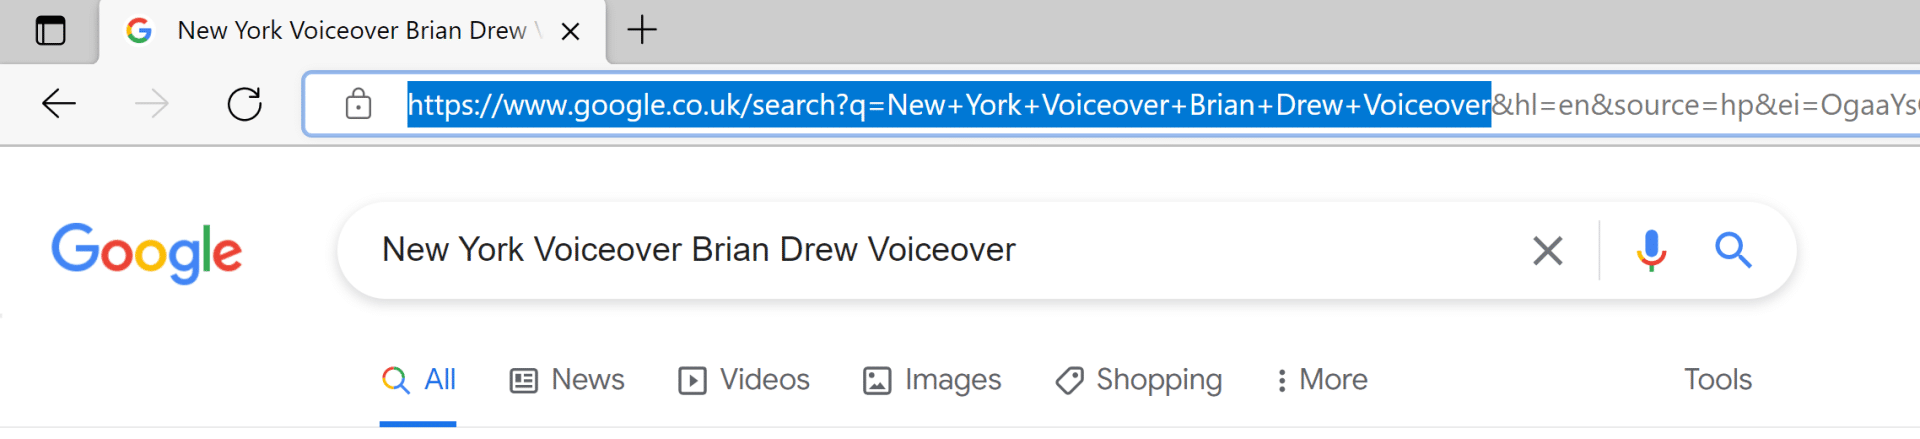 Google Highlight Autosuggest Search Term